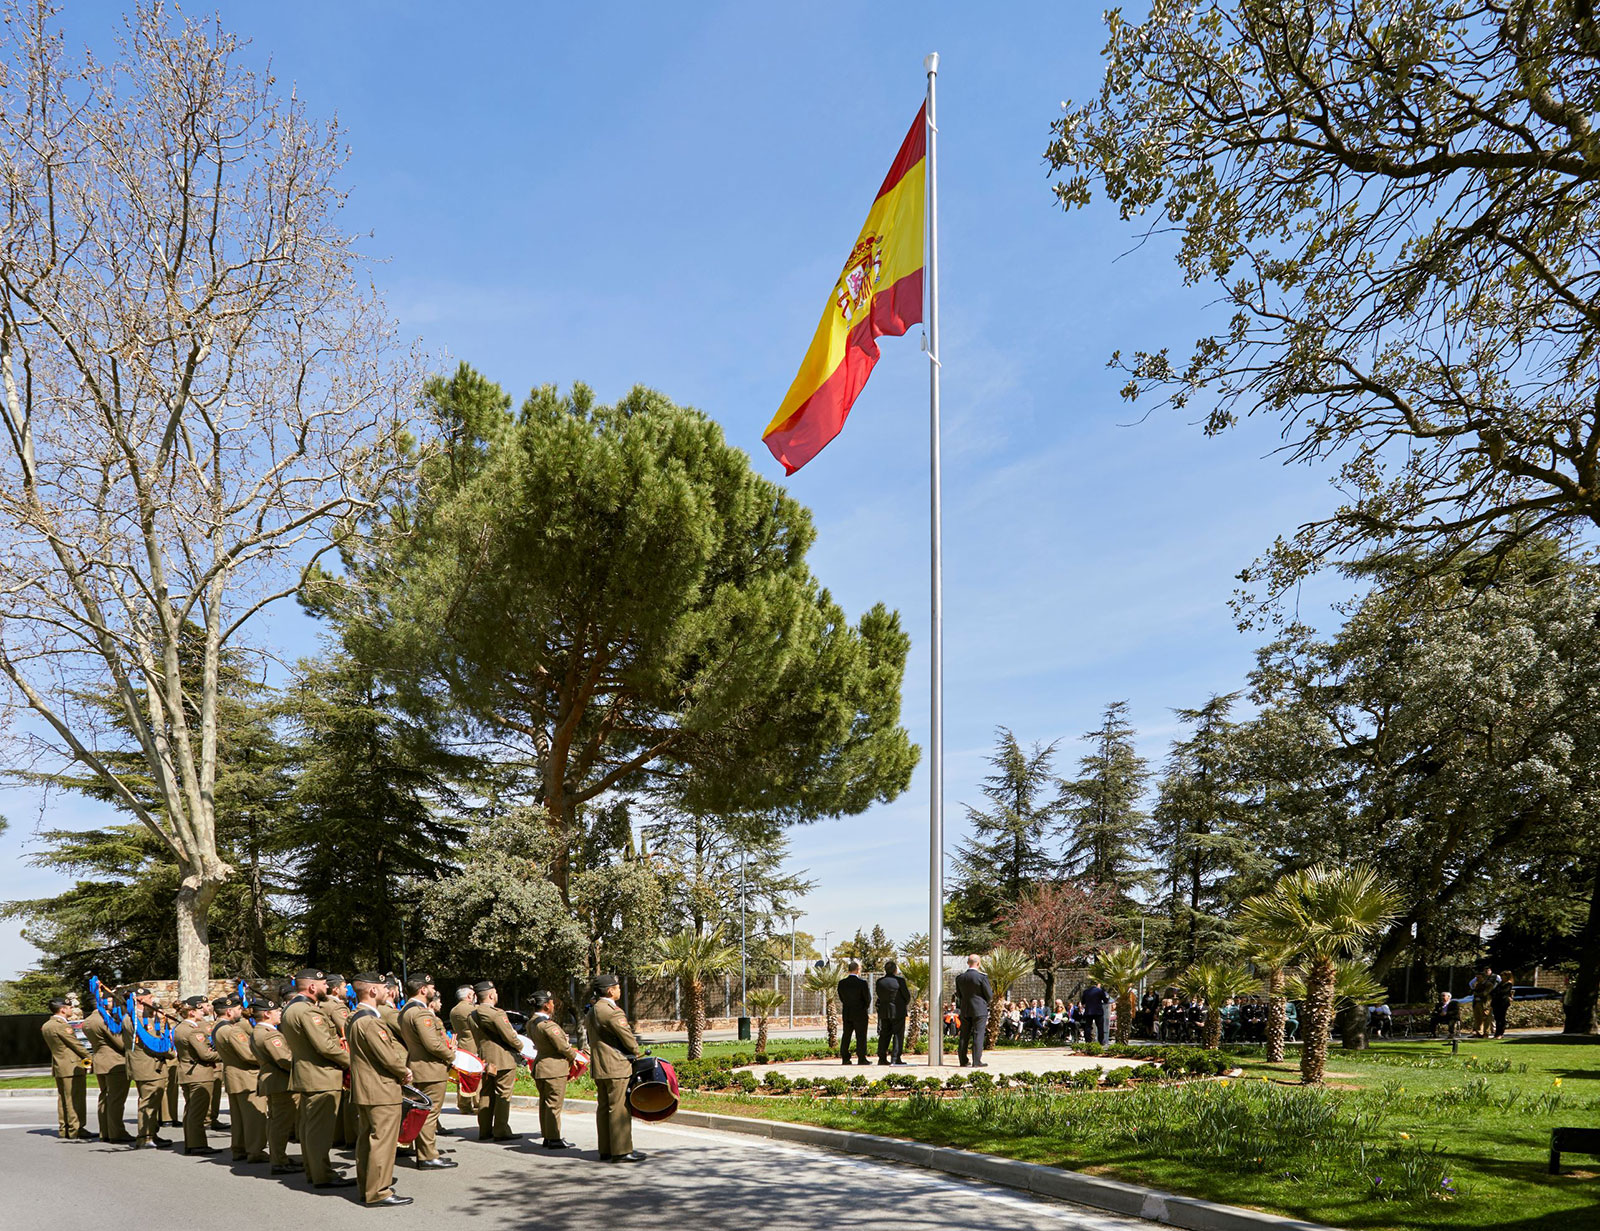 Acto de inauguración e izado de la bandera de España